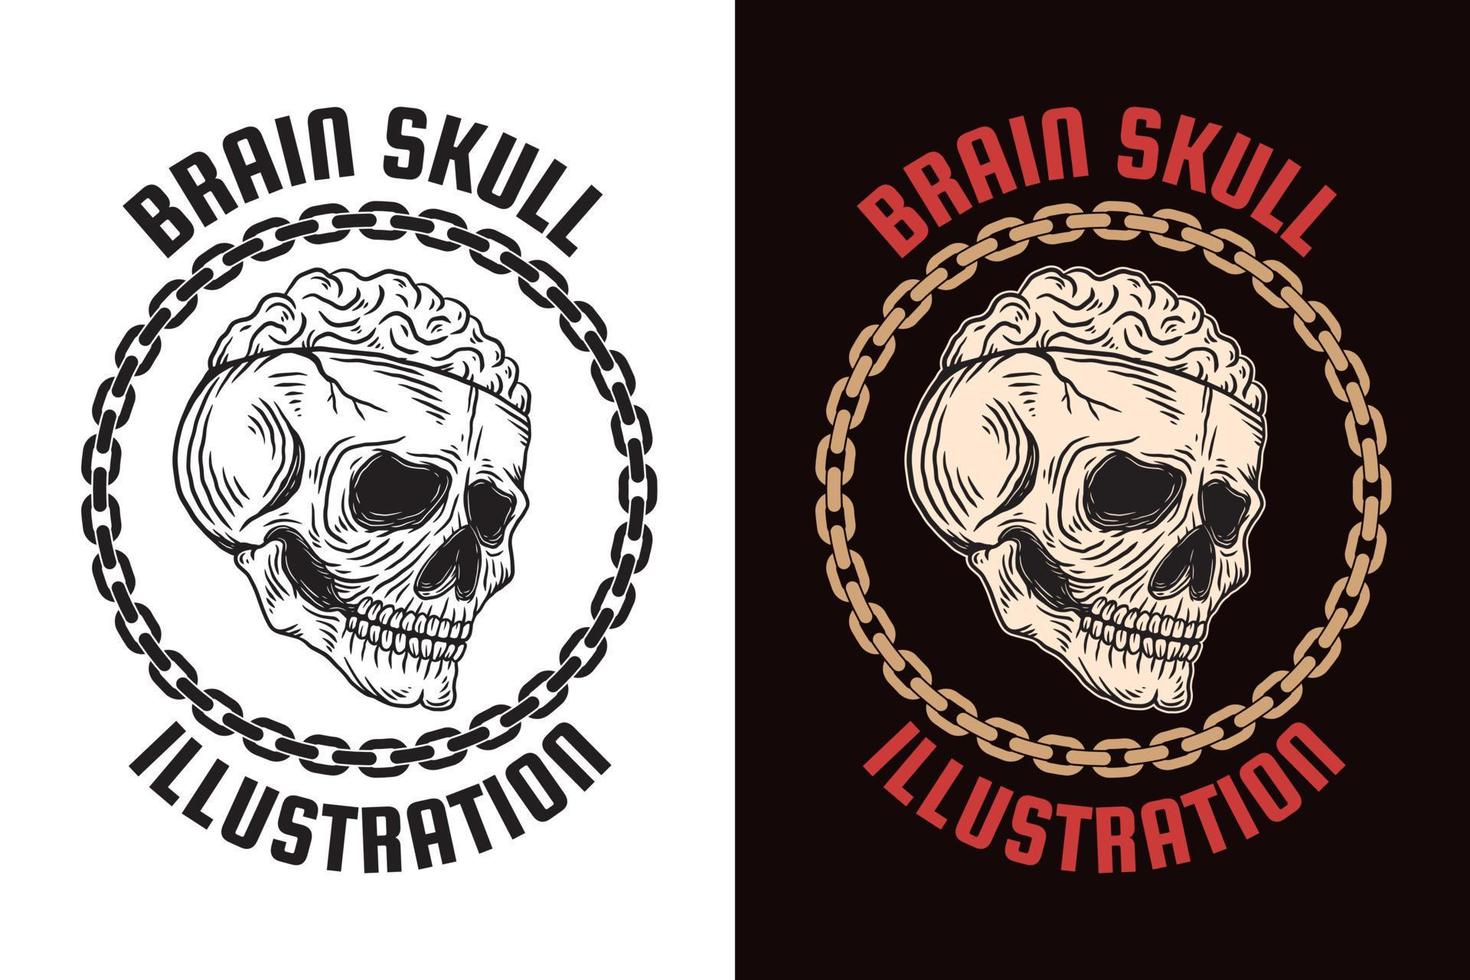 Set Dark illustration Skull Bones Head Hand drawn Hatching Outline Style Mystical Celestial Symbol Tattoo Merchandise T-shirt Merch vintage vector